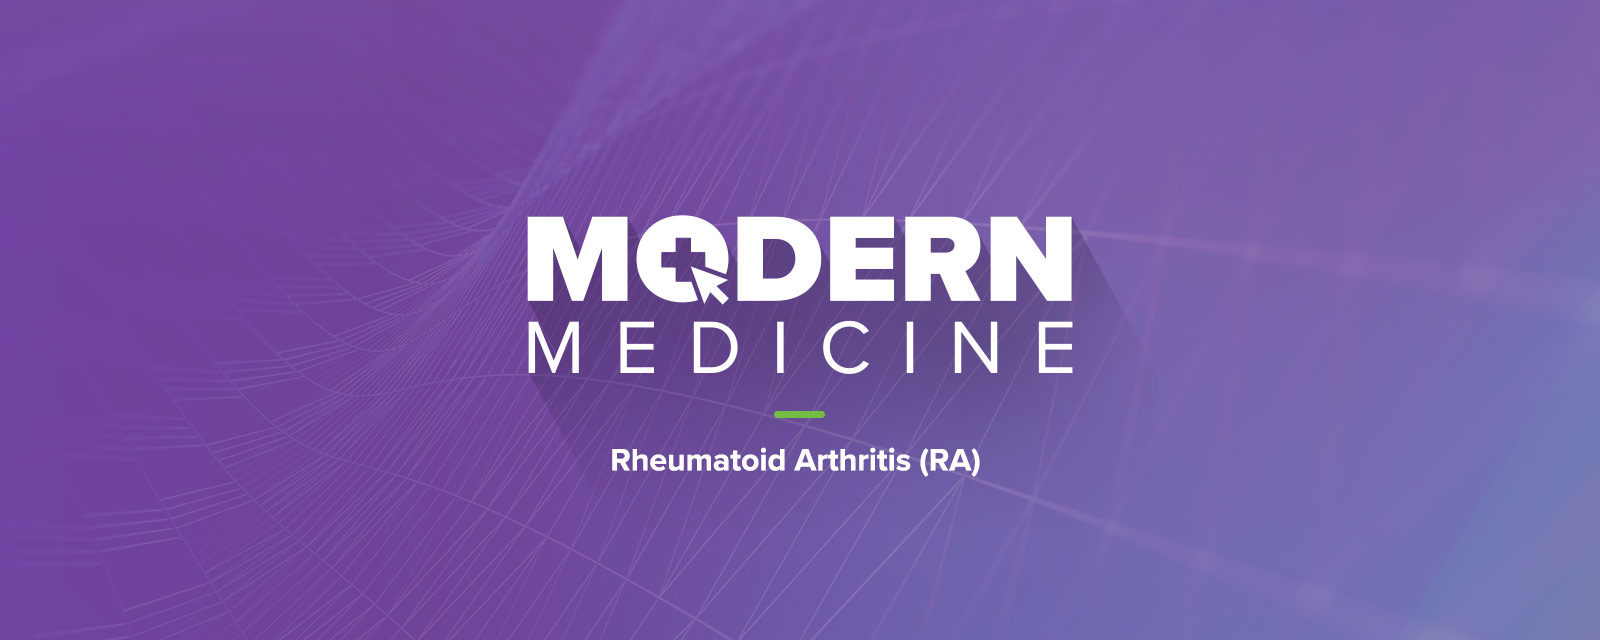 Modern Medicine: Rheumatoid Arthritis (RA)